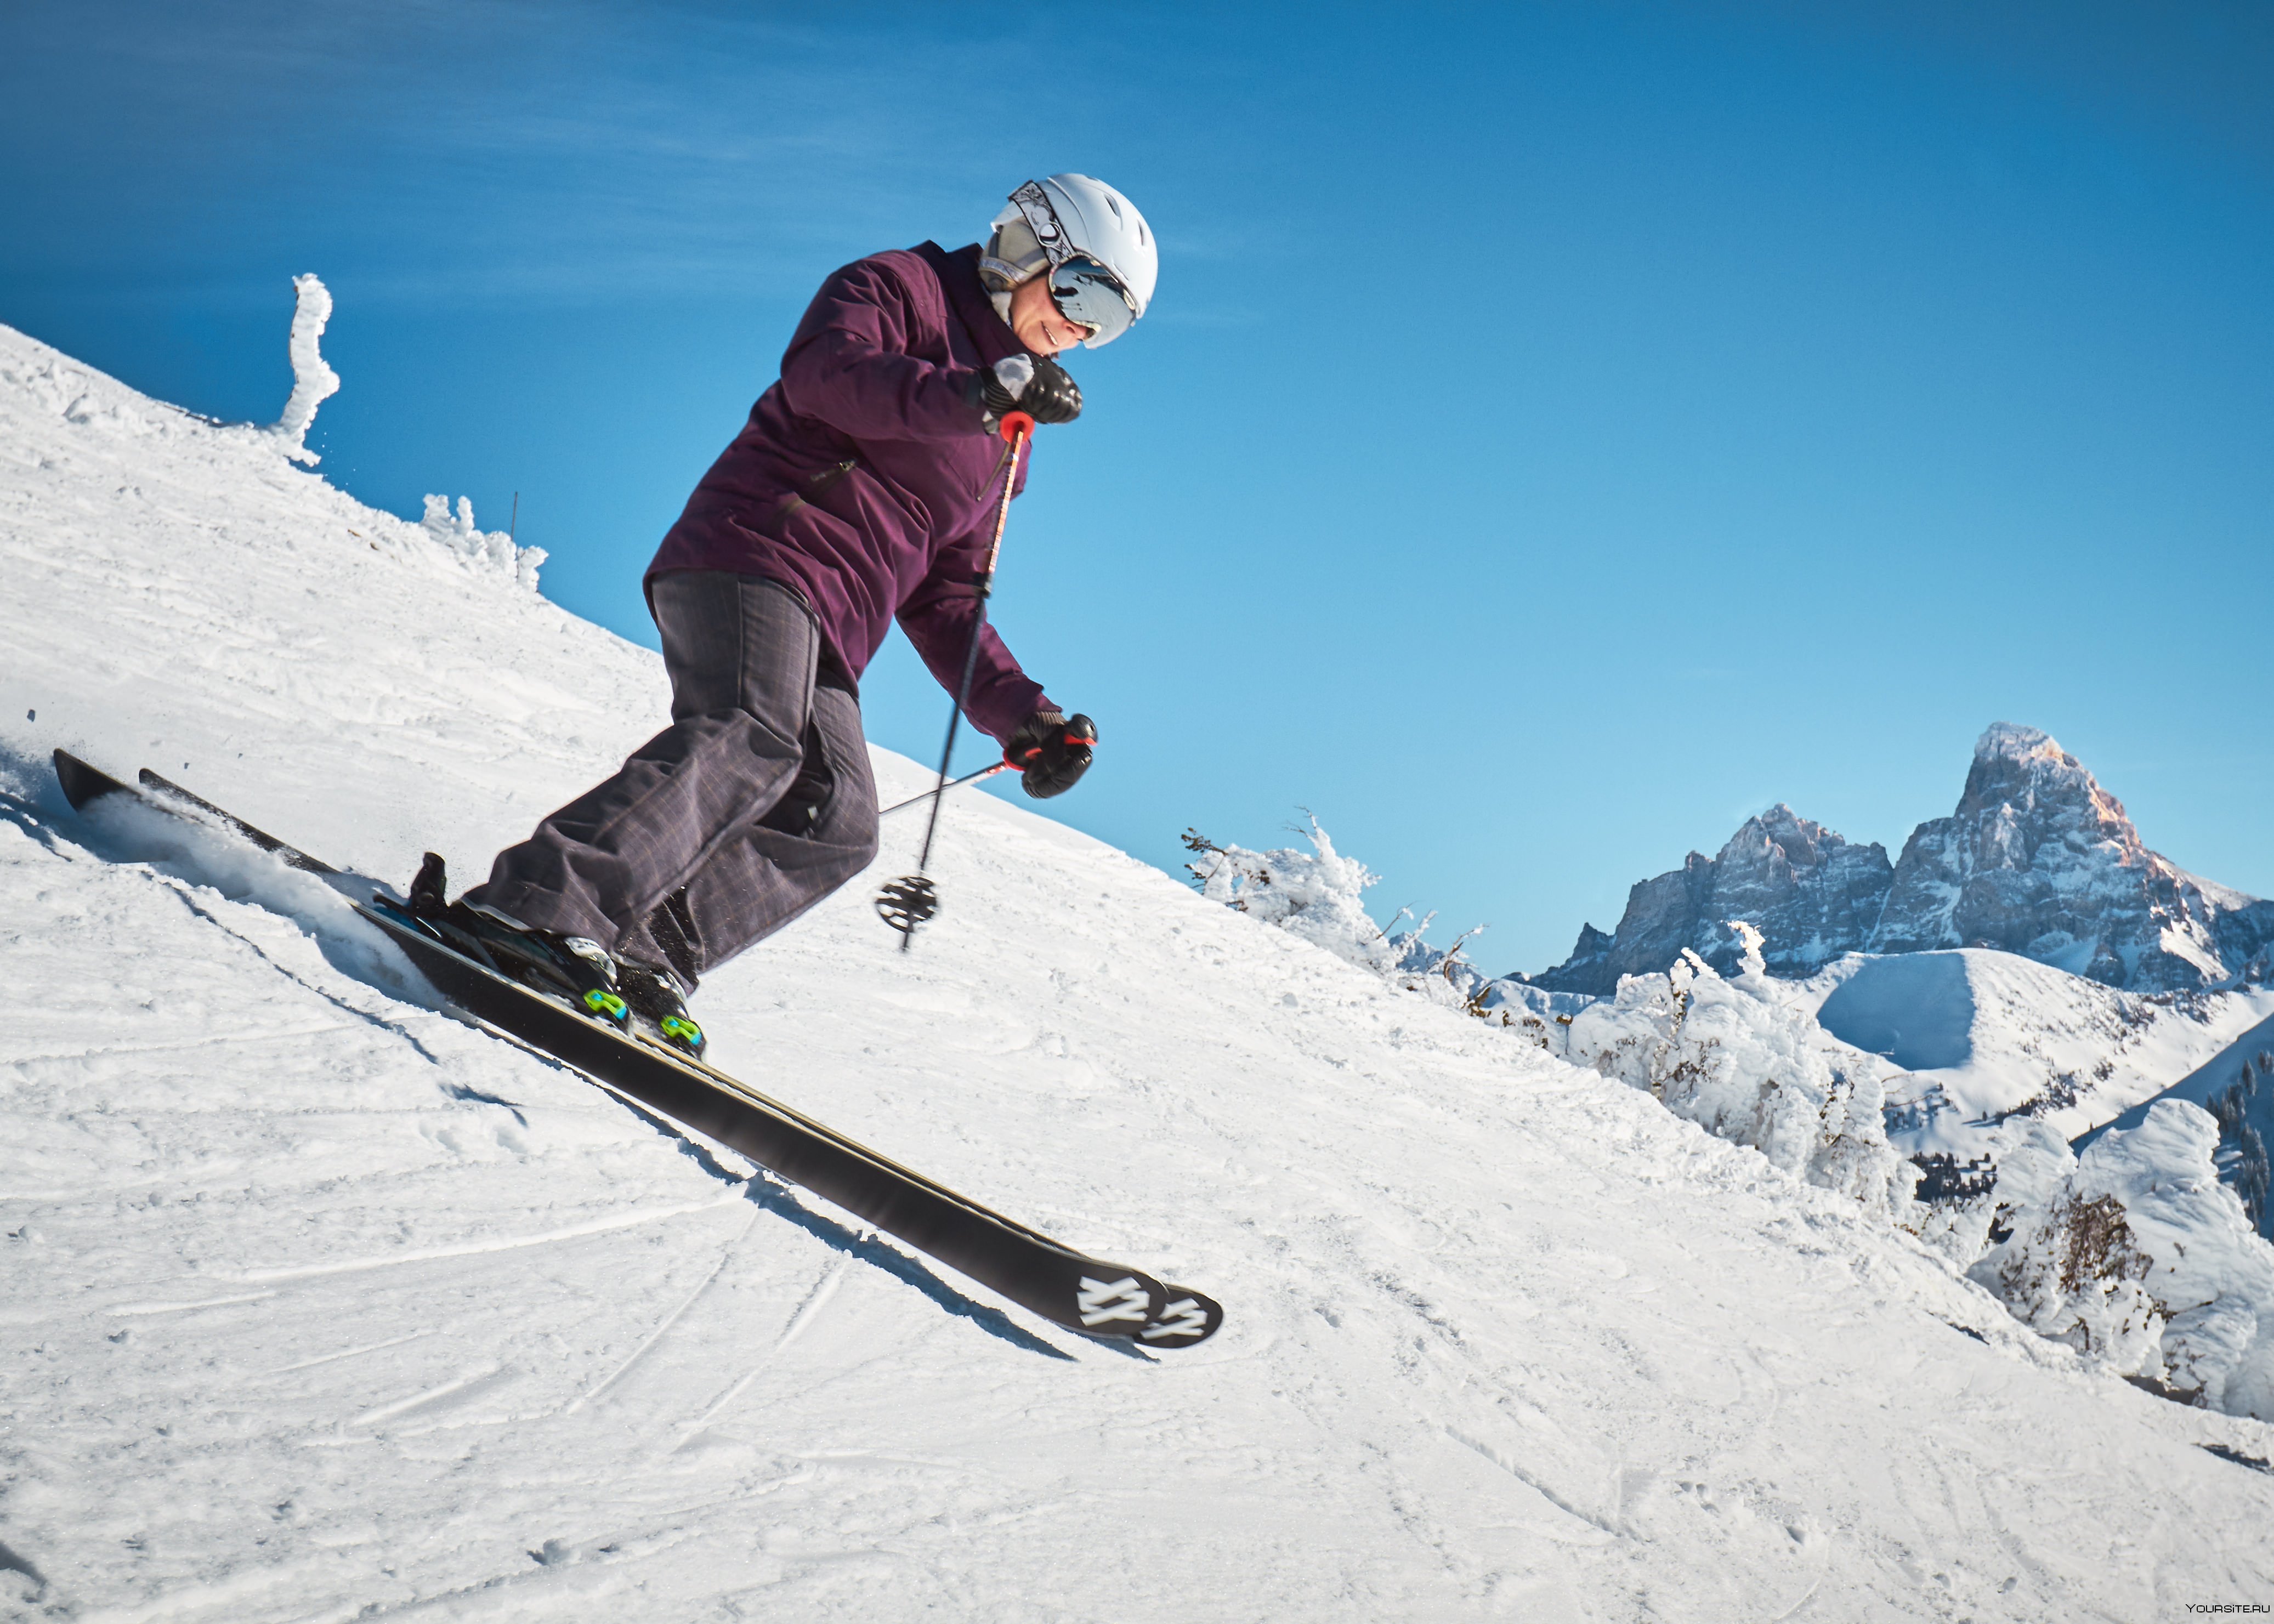 Skiing pictures. Горнолыжный спорт. Горные лыжи. Горные лыжи спорт. Зима спорт.